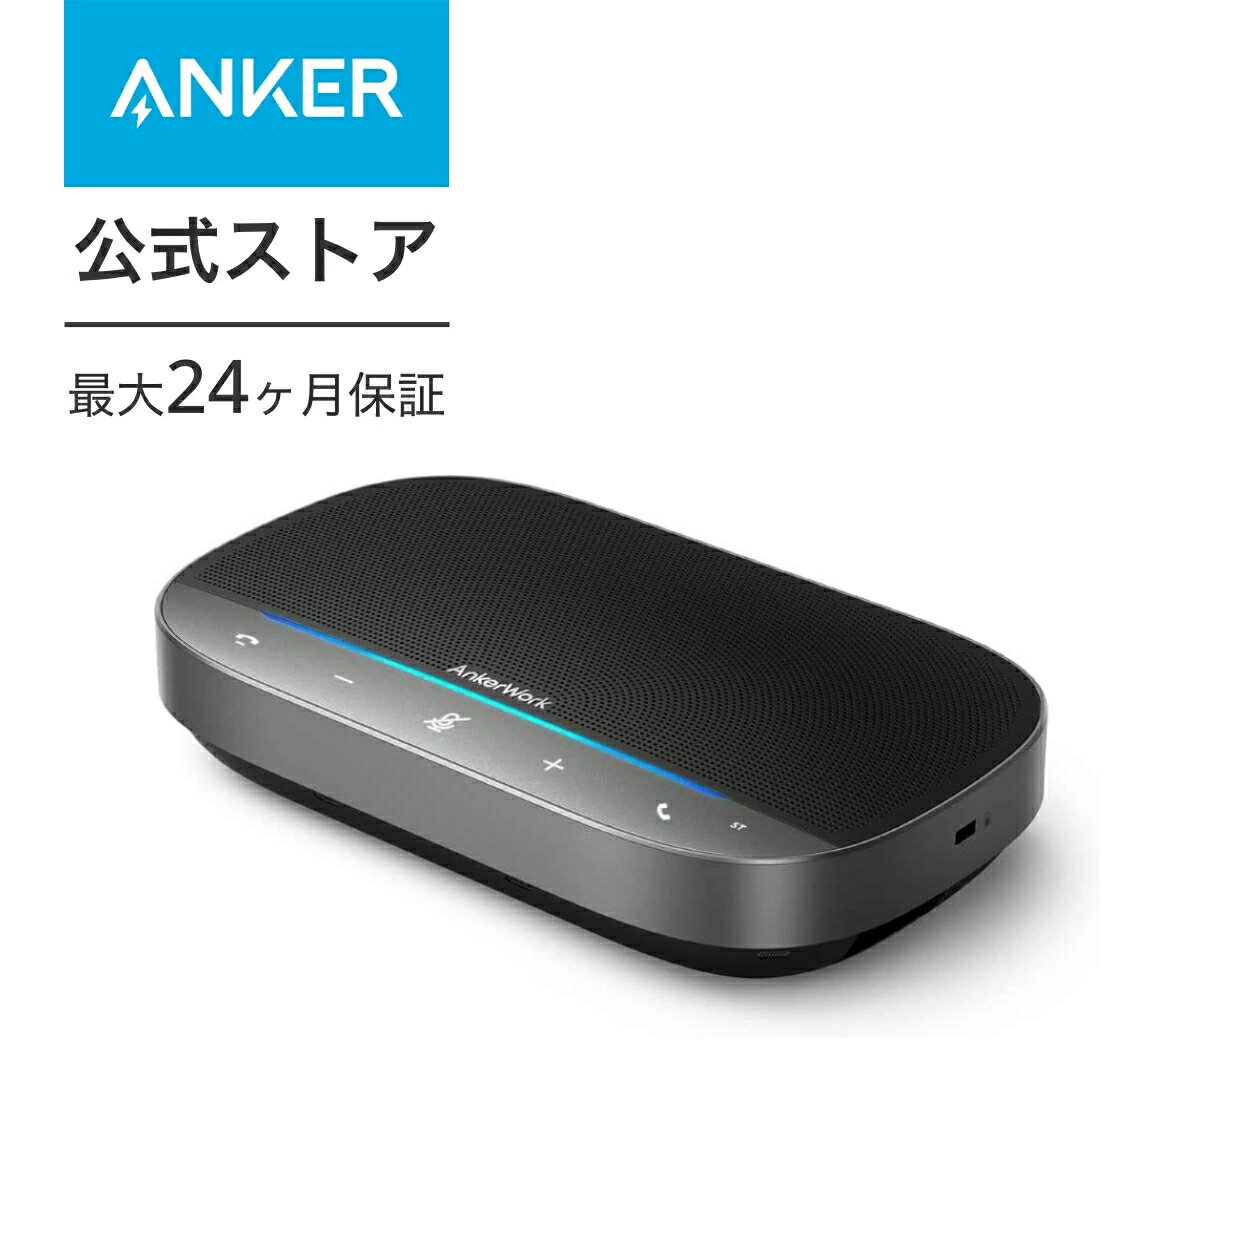 AnkerWork SR500 Speakerphone 会議用マイクスピーカー AI ノイズキャンセリング VoiceRadar 2.0搭載 ディープラーニング 5台連結可能 最大50人まで対応 マイク8個内蔵 48kHz 有線接続 オンライン会議